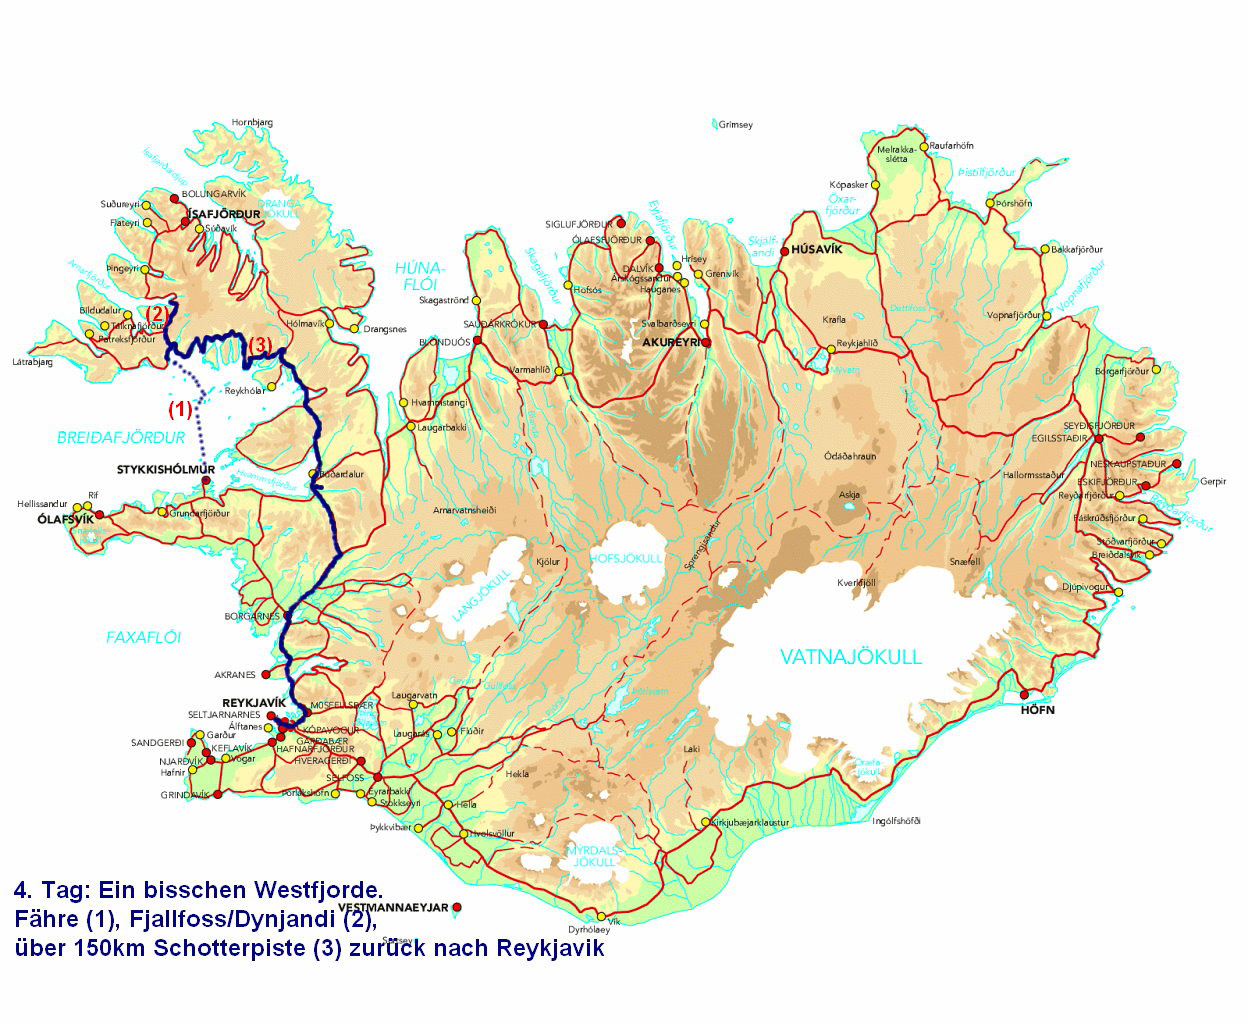 Fähre, Westfjorde, 150km Schotterpiste: der 4.Tag.